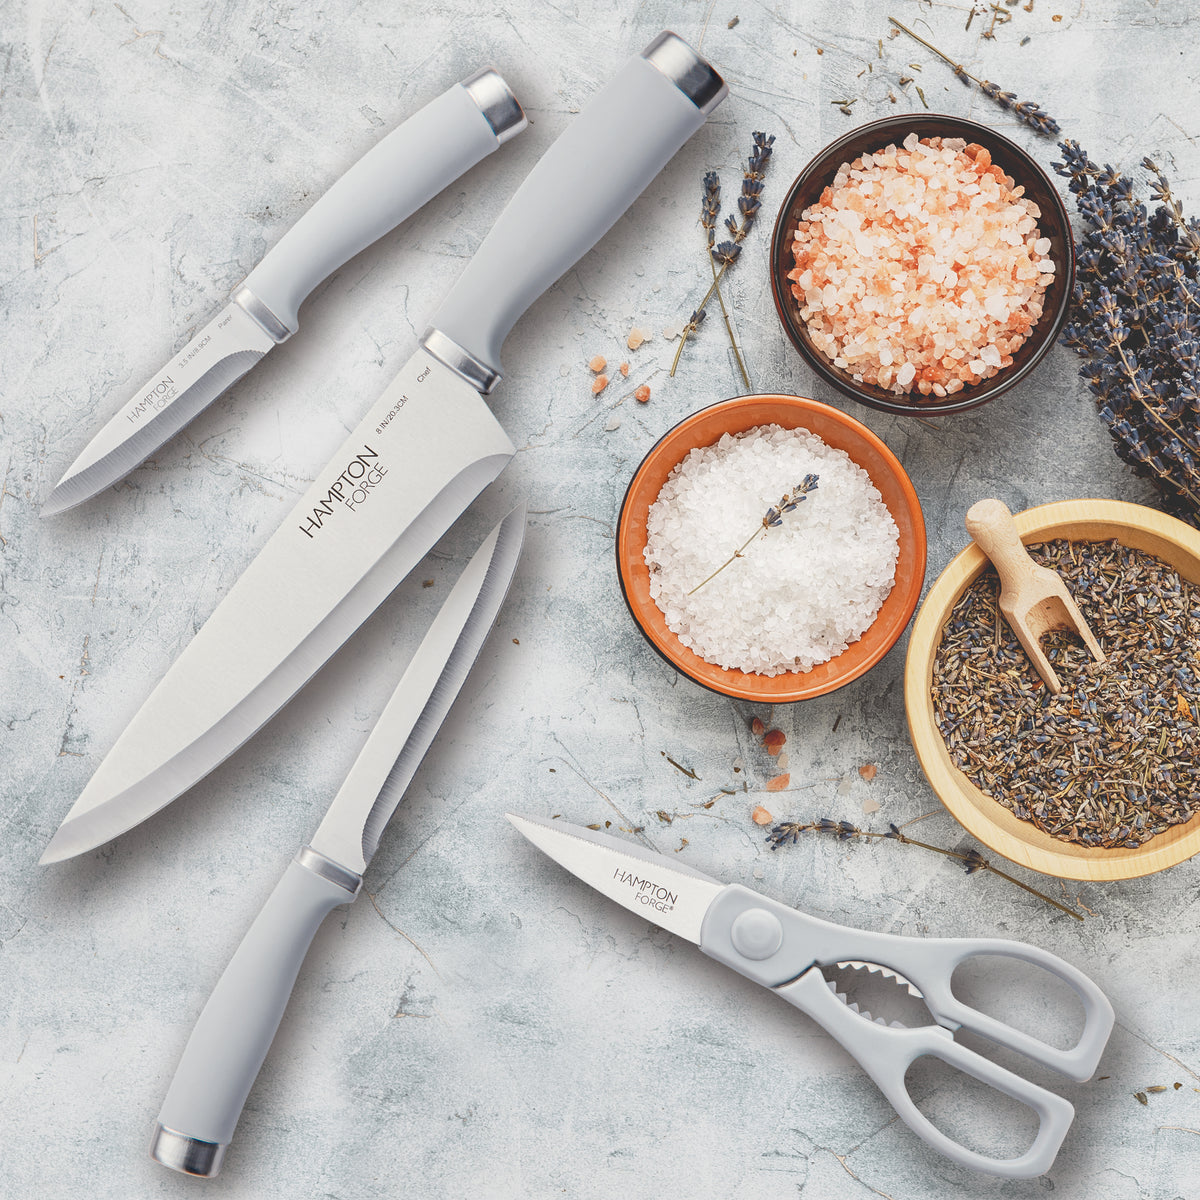 Hampton Forge Kitchen Knife Sets